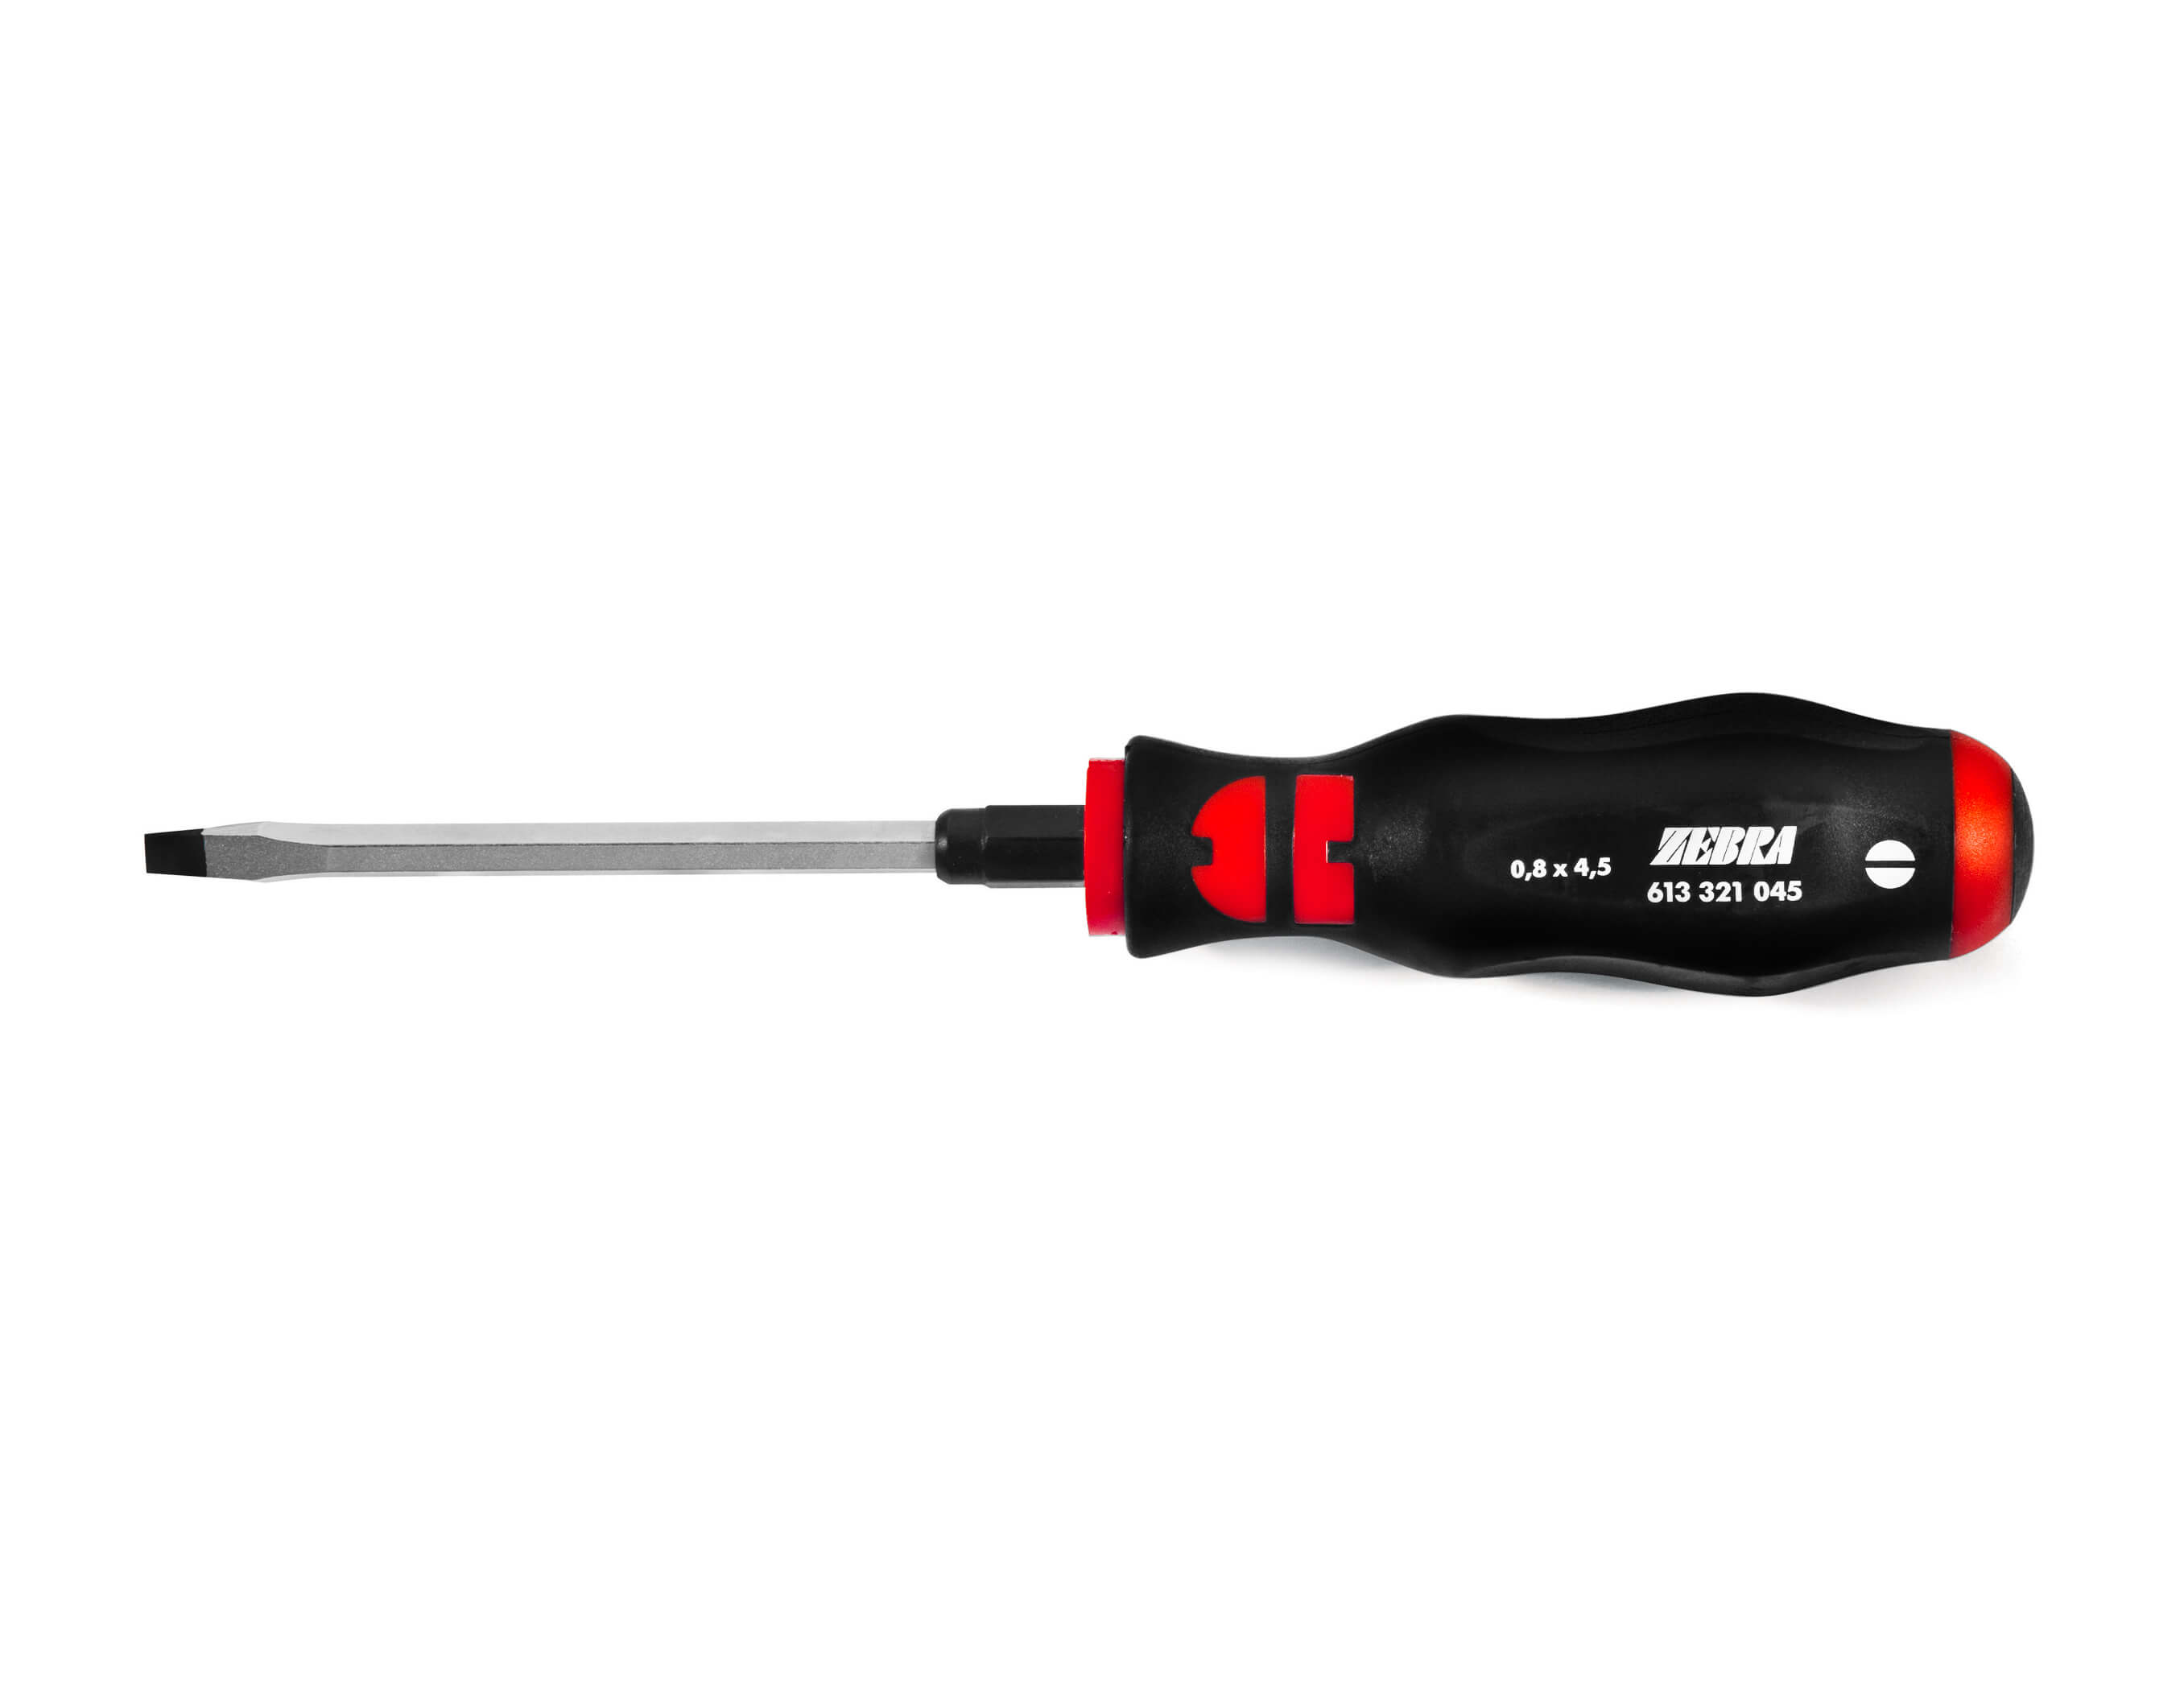 Slotted screwdriver hex blade impact cap 0.8X4.5X90